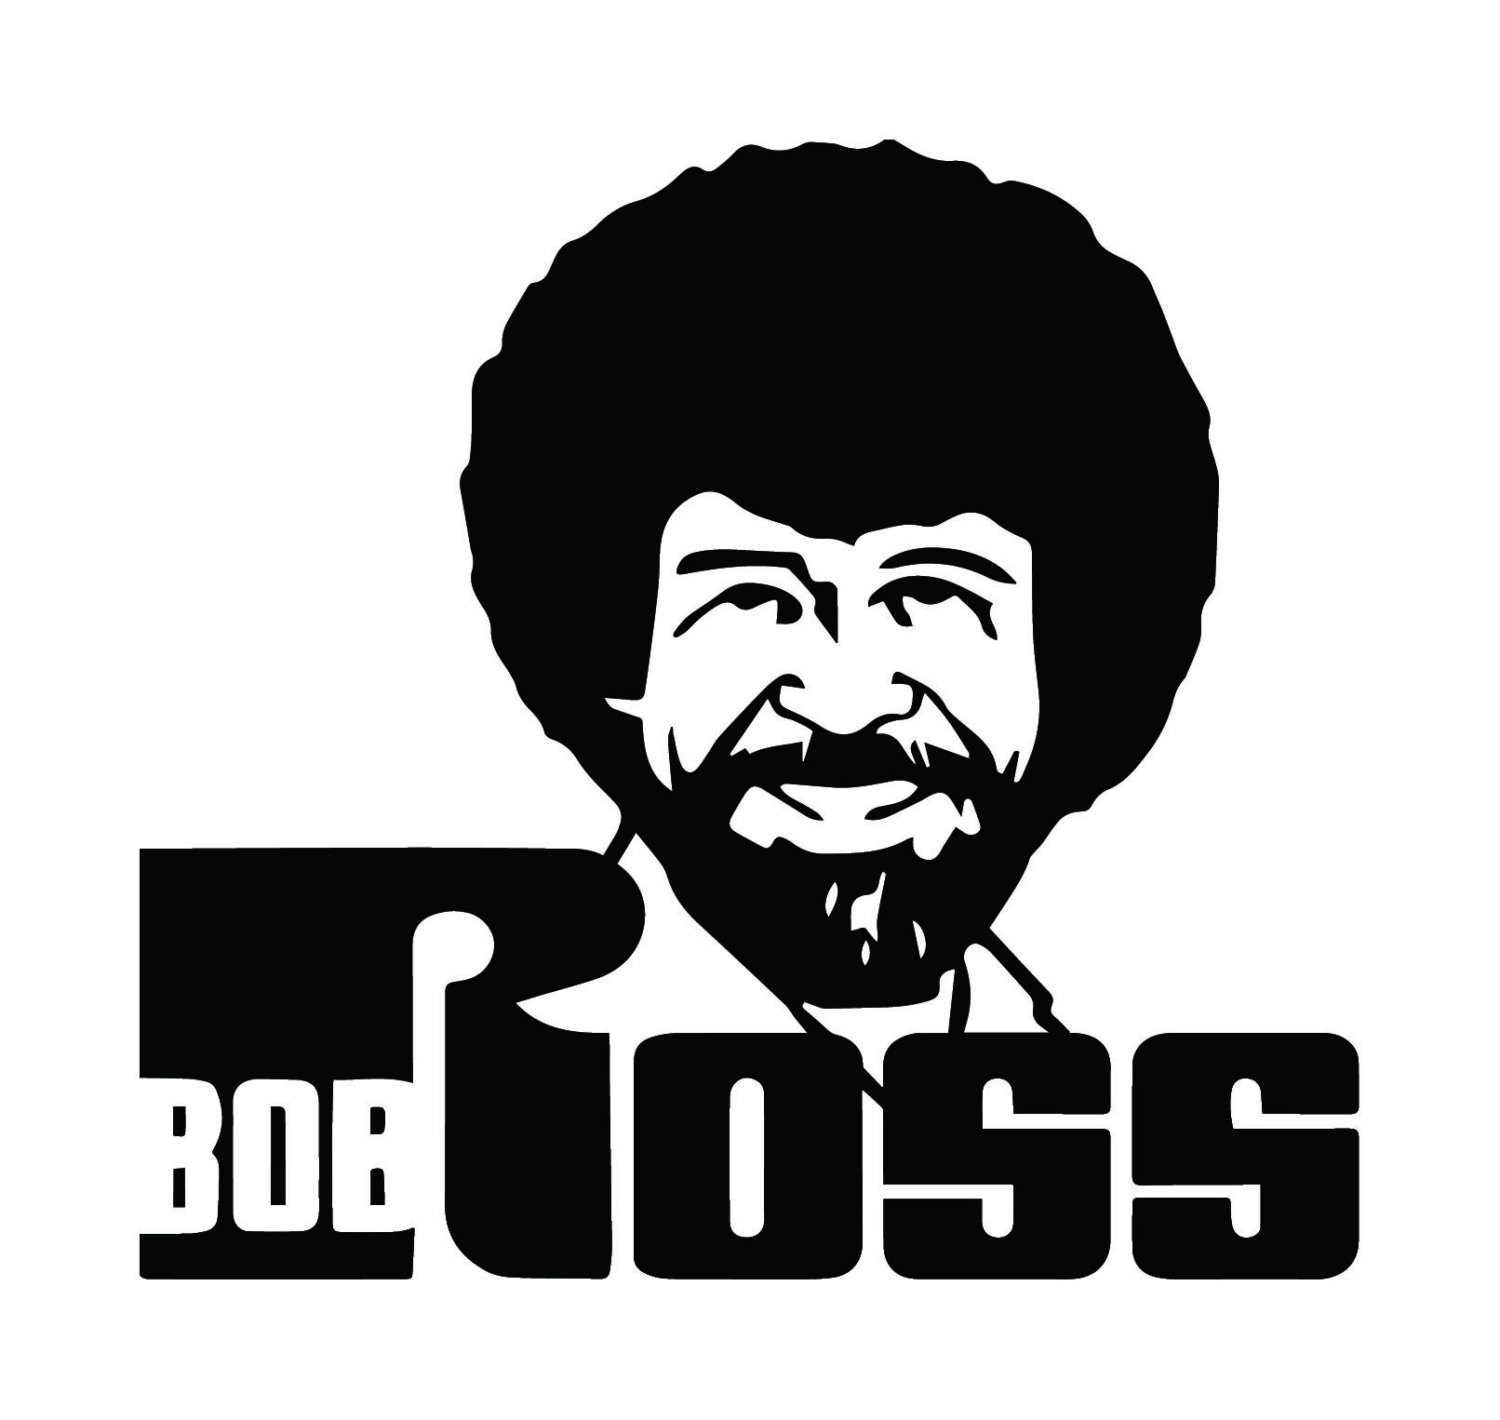 Bob Ross sticker decal by IMadeThisVinyl on Etsy